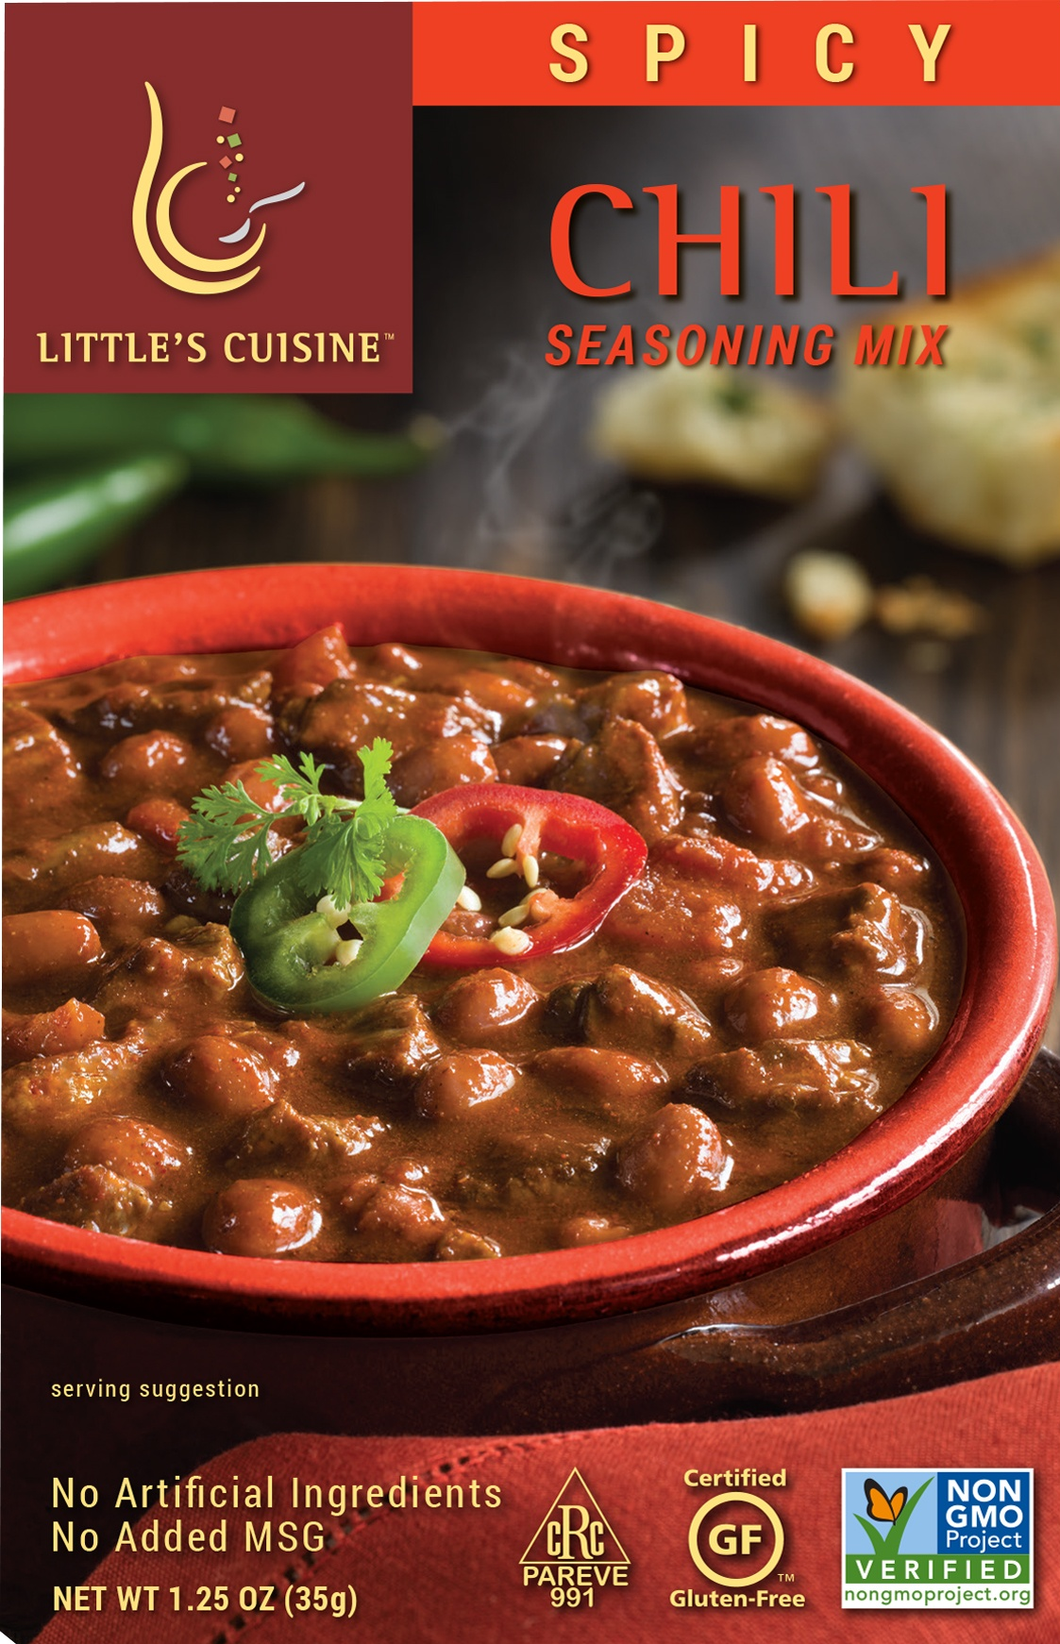 Little's Cuisine Spicy Chili Seasoning Mix 1.25 oz.